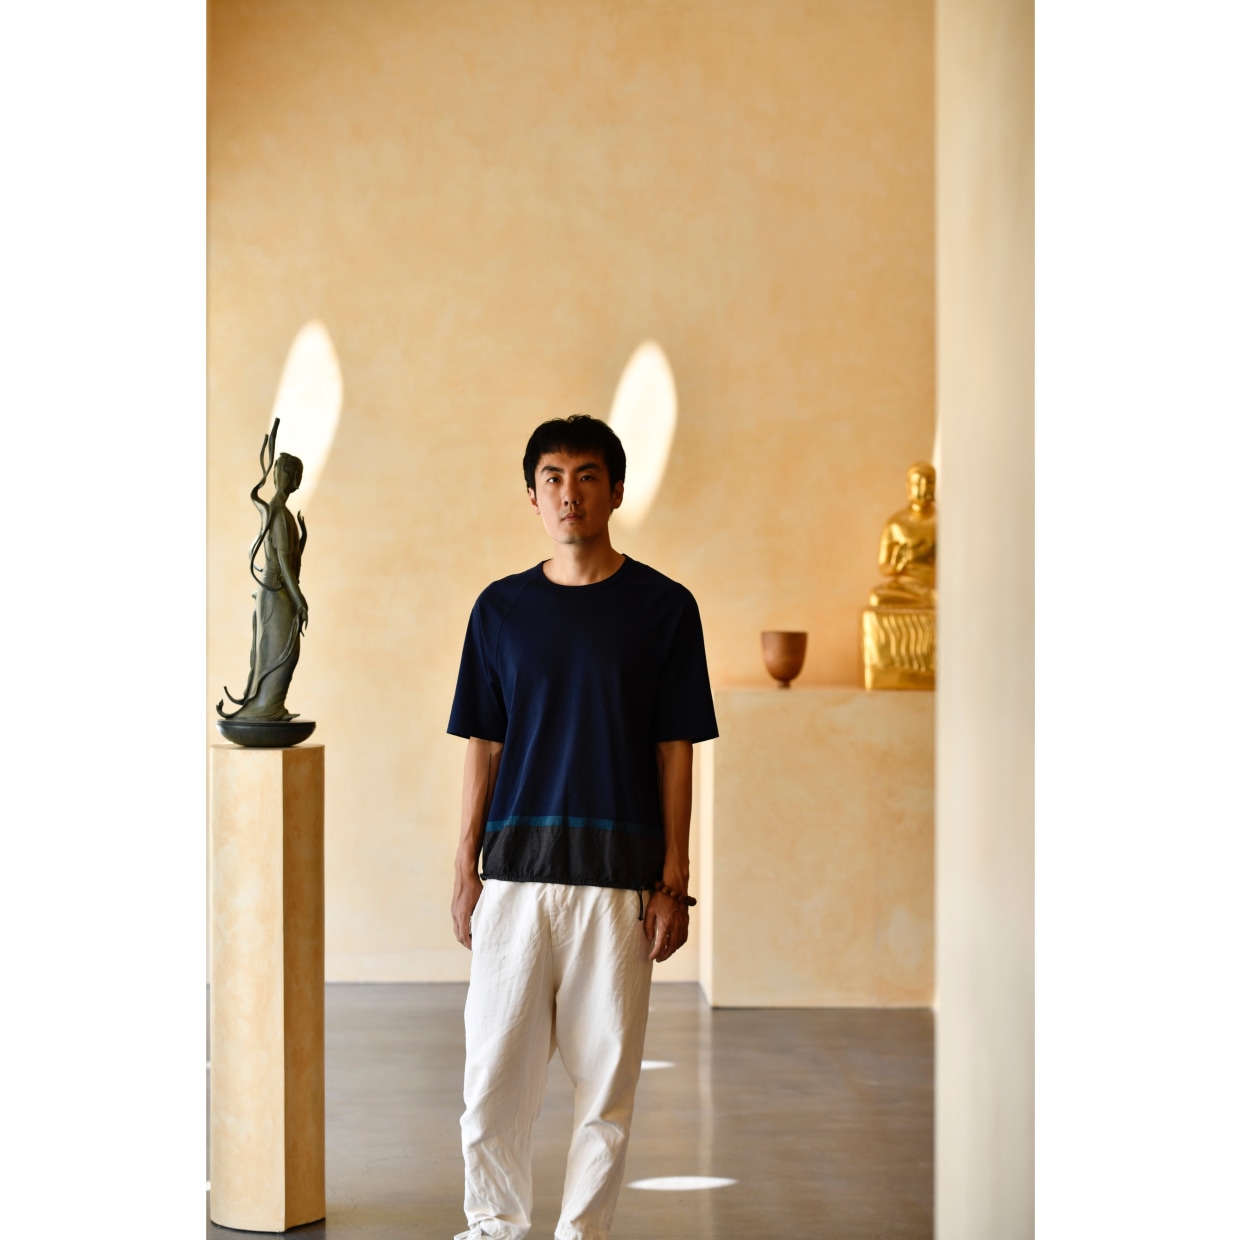 ARTIST: Jiang Sheng Jiang Sheng is an artist and sculptor. He was born into a family of fine art in...